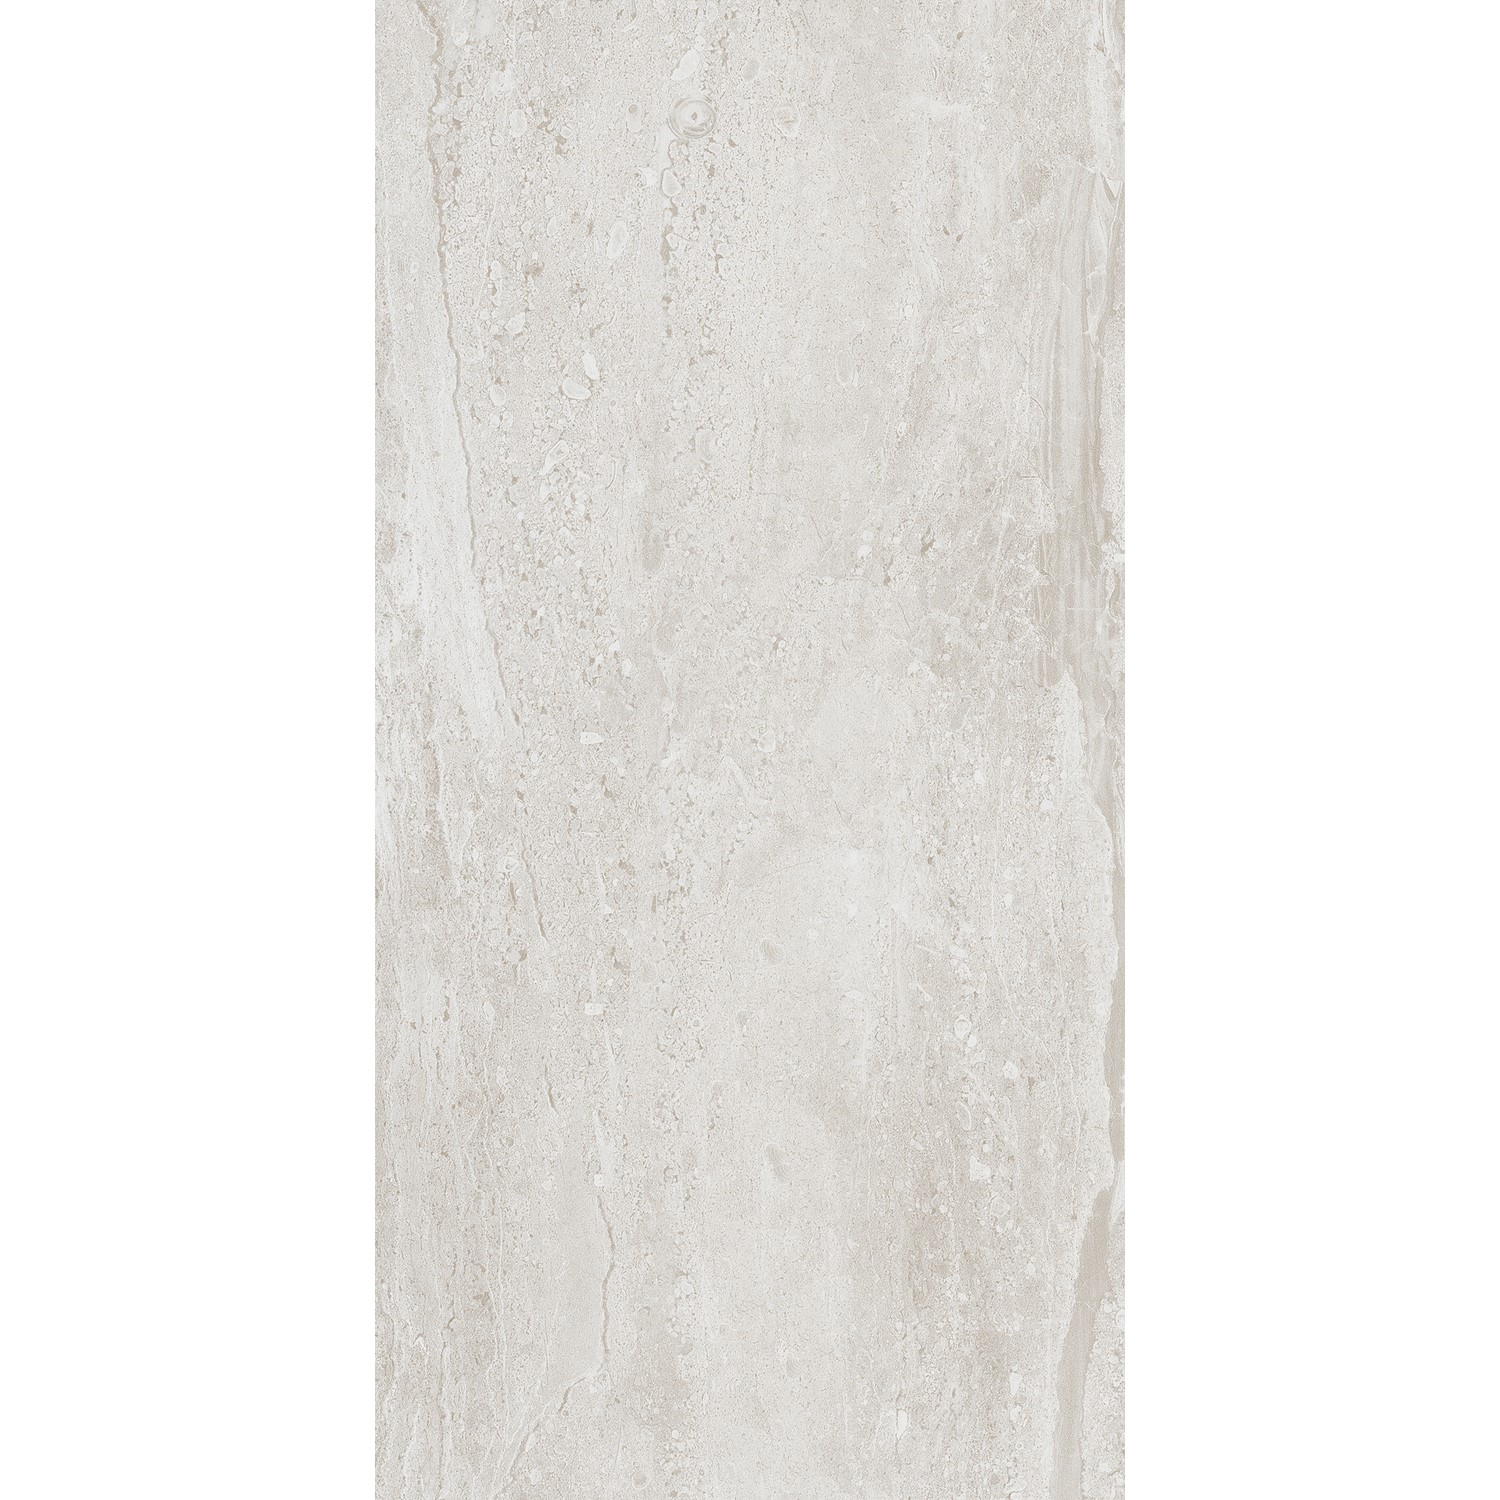 Beige Stone Effect Wall Tile 30 x 60cm - Kaya